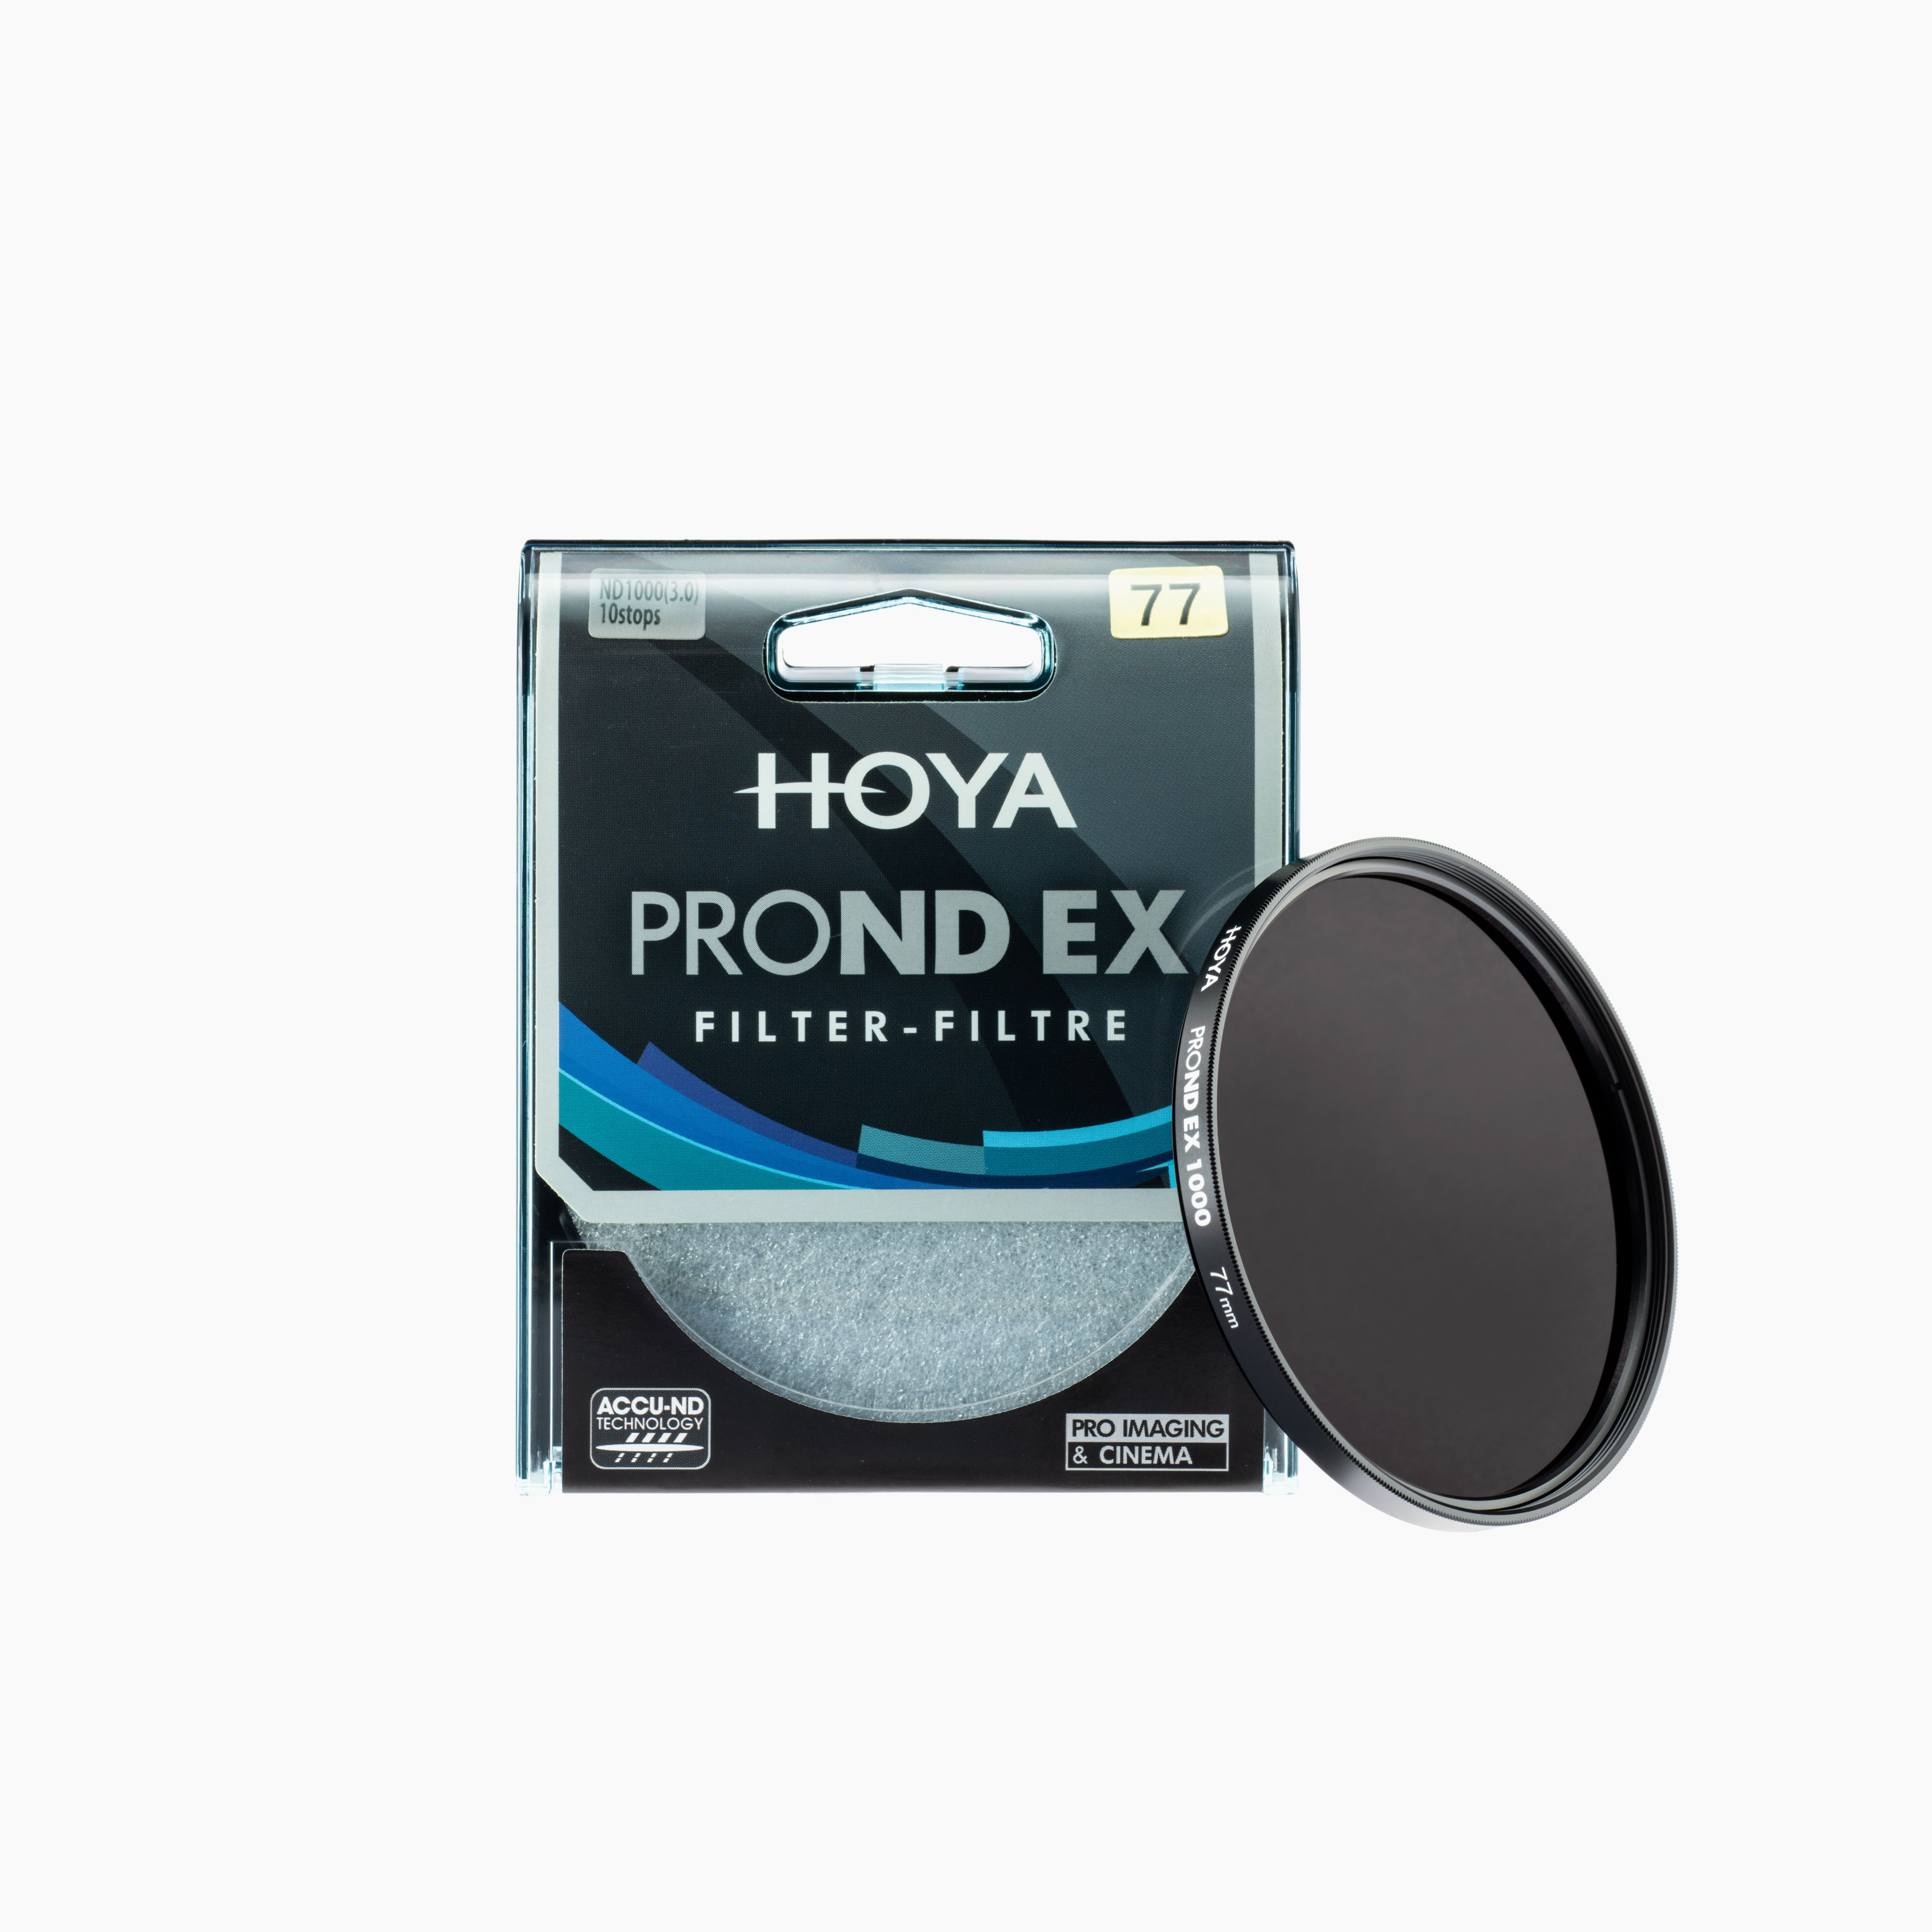 HOYA PROND EX 1000 (3.0)